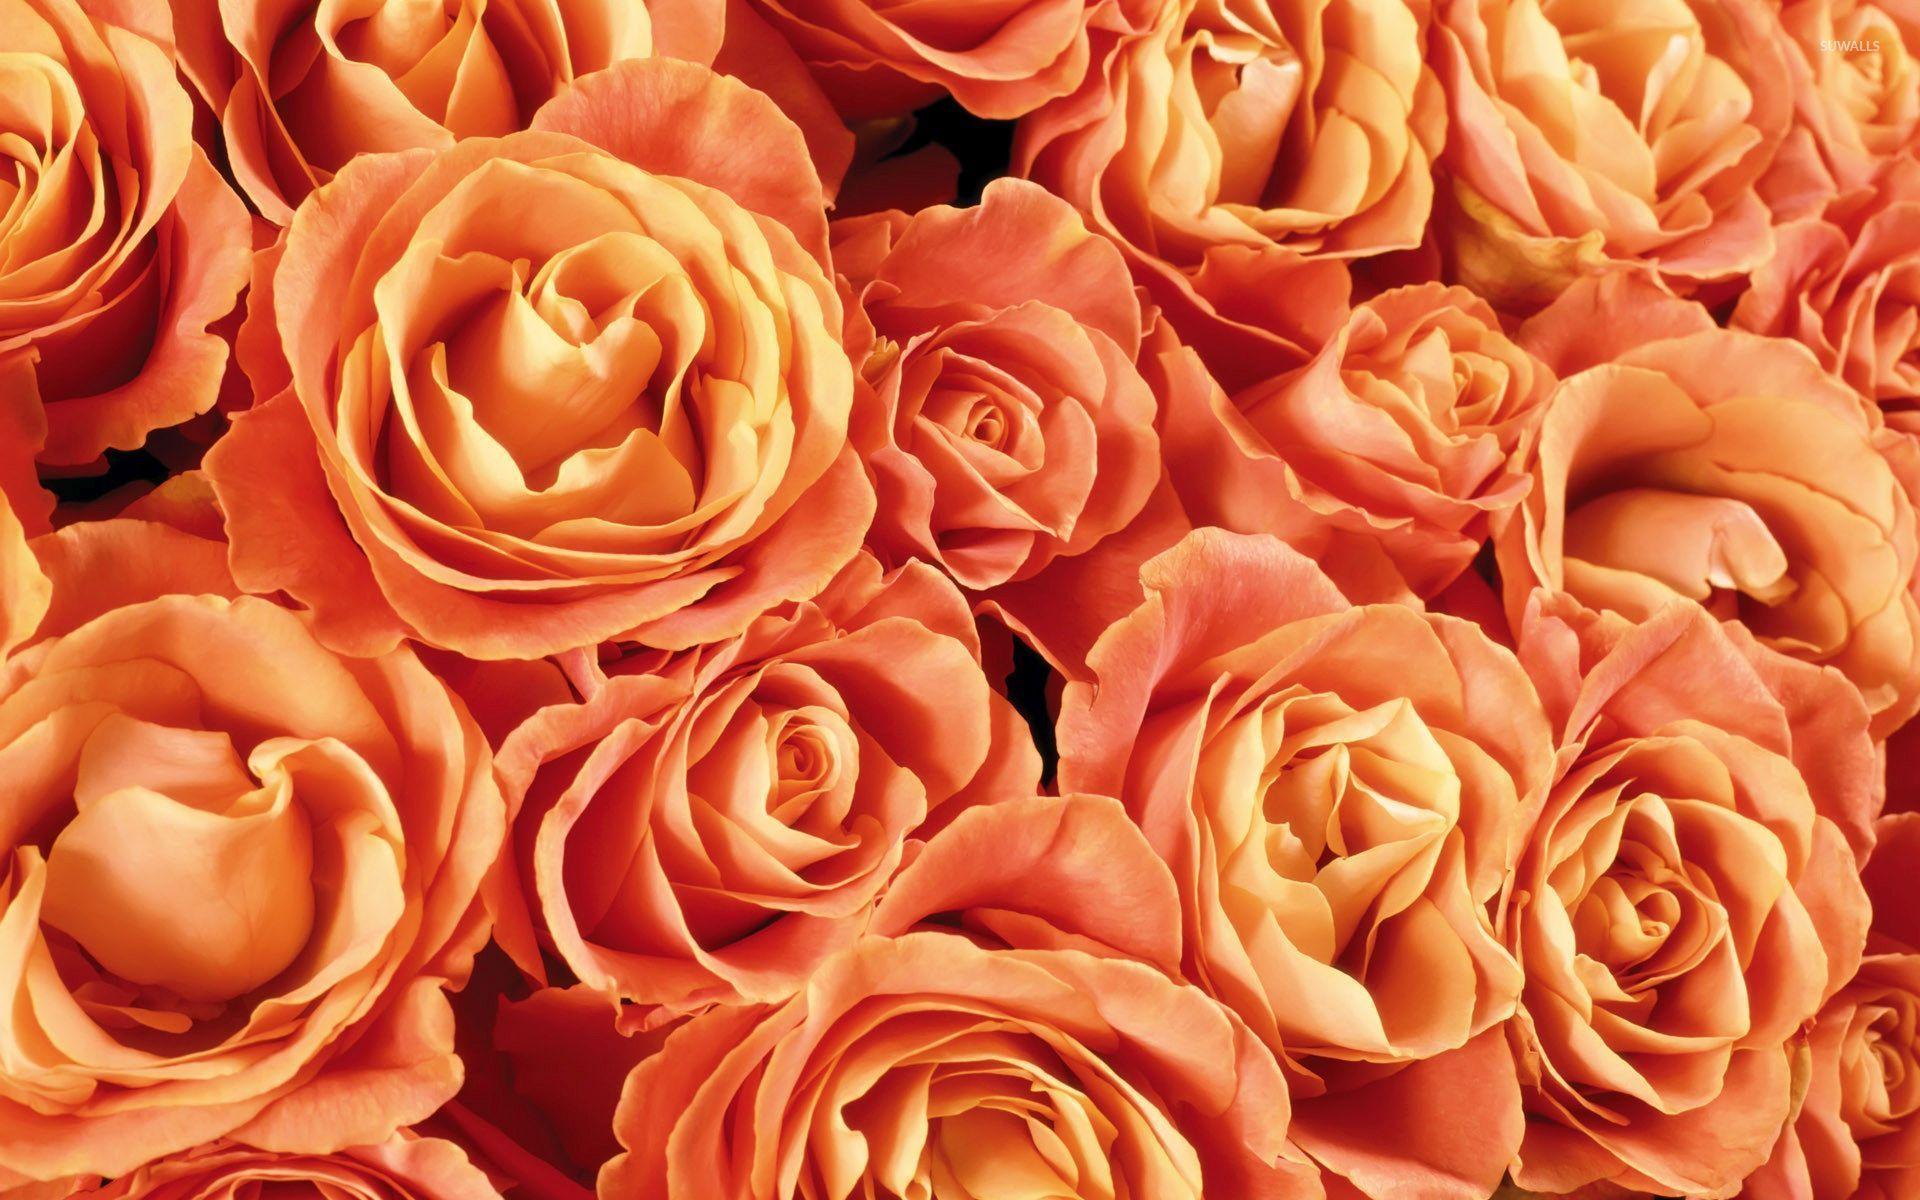 Orange Flowers in Bright Sunshine Wallpaper Stock Image  Image of bouquet  happy 117046435